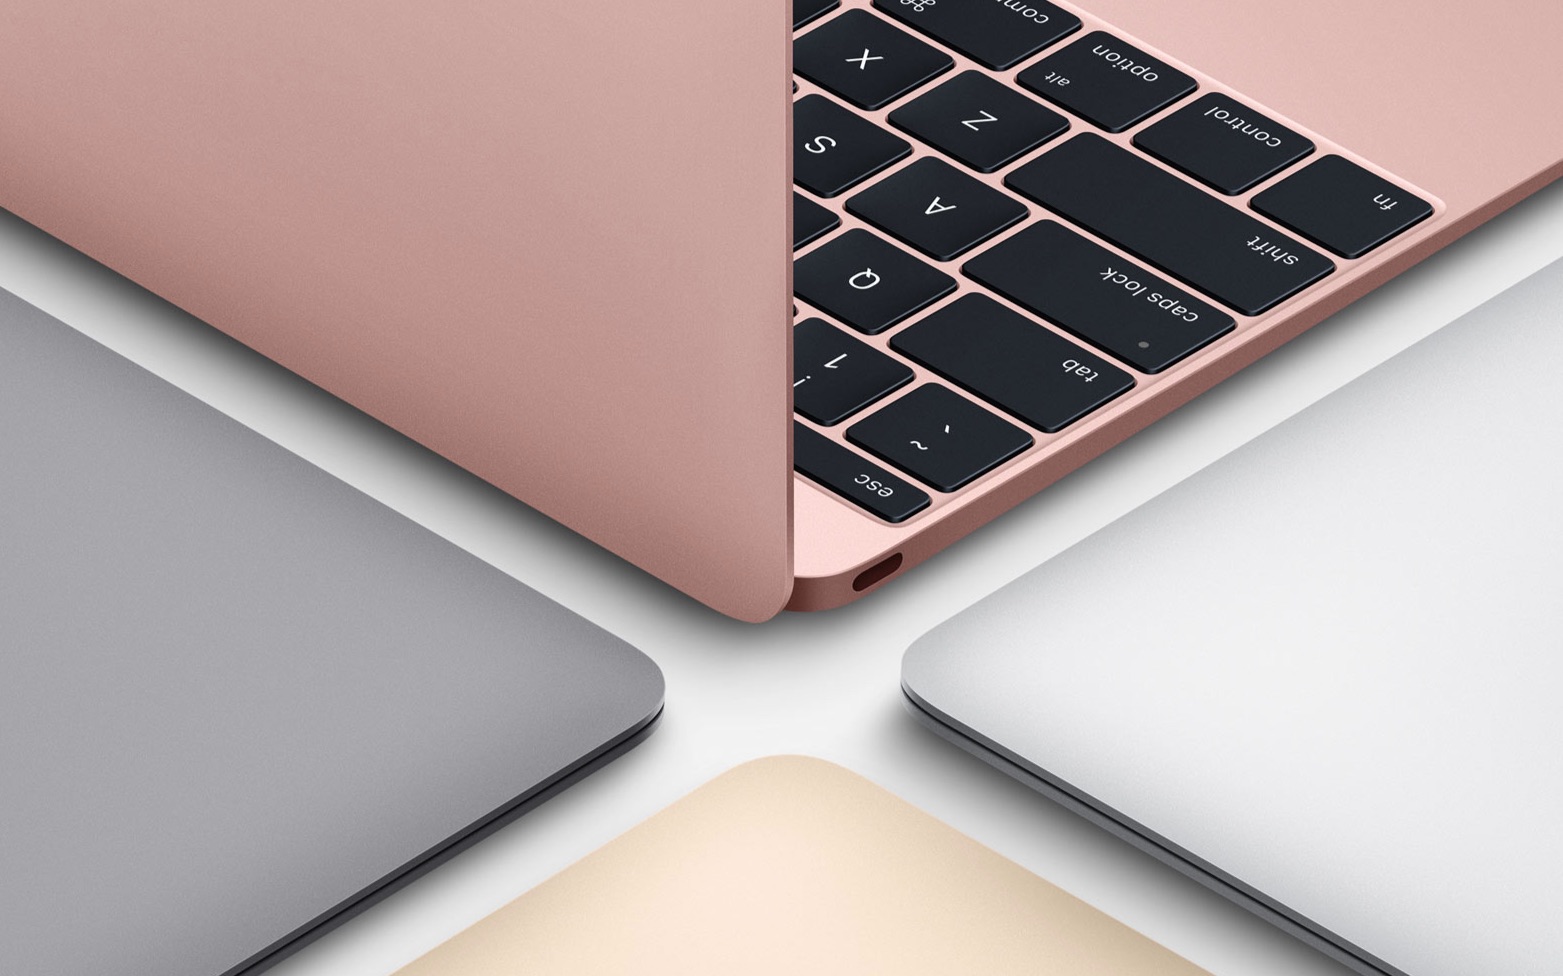 Apple Price Change for Macs